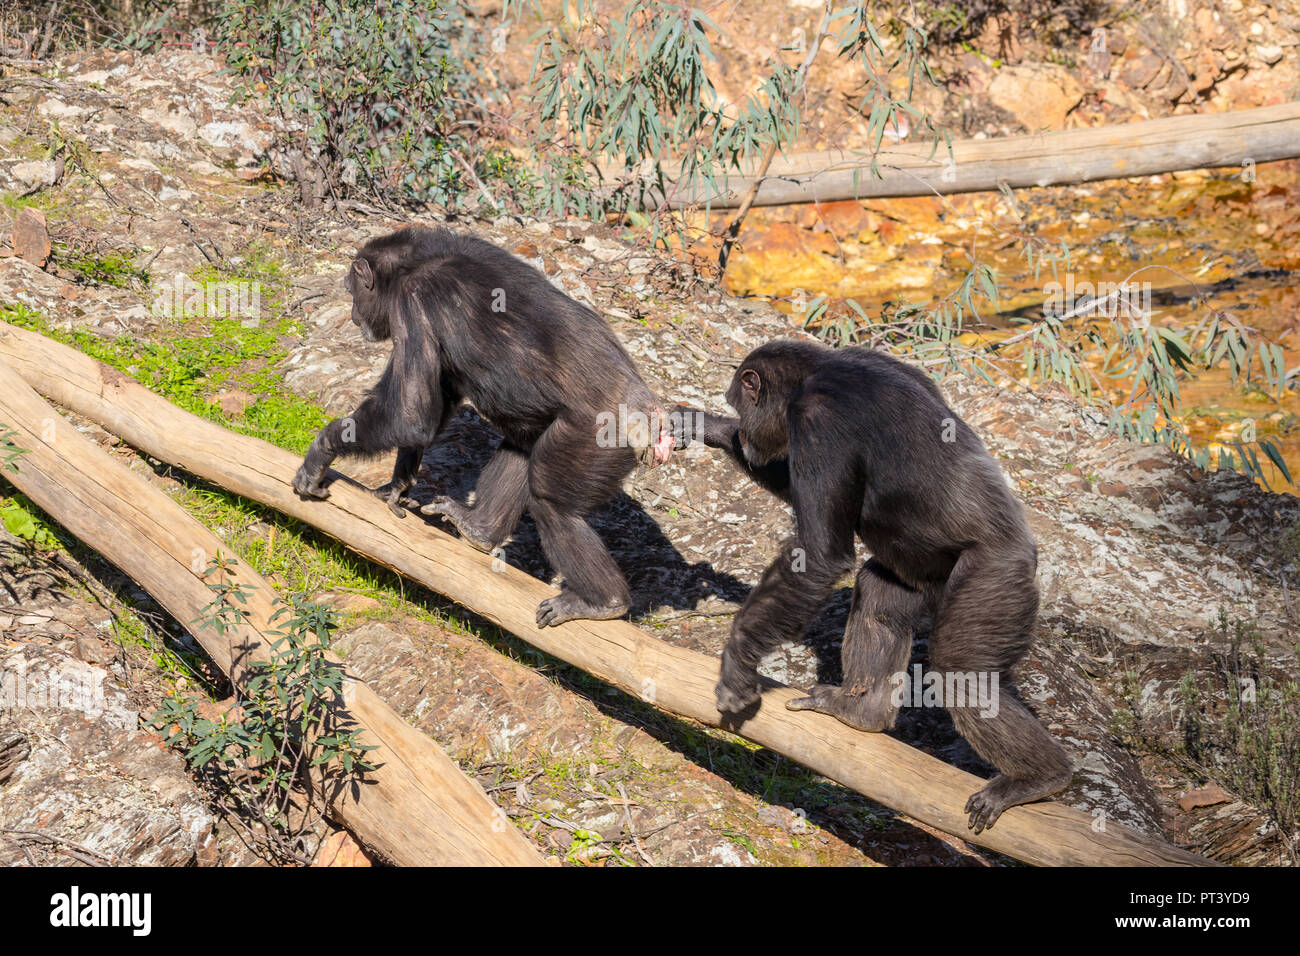 chimpanzee native habitat